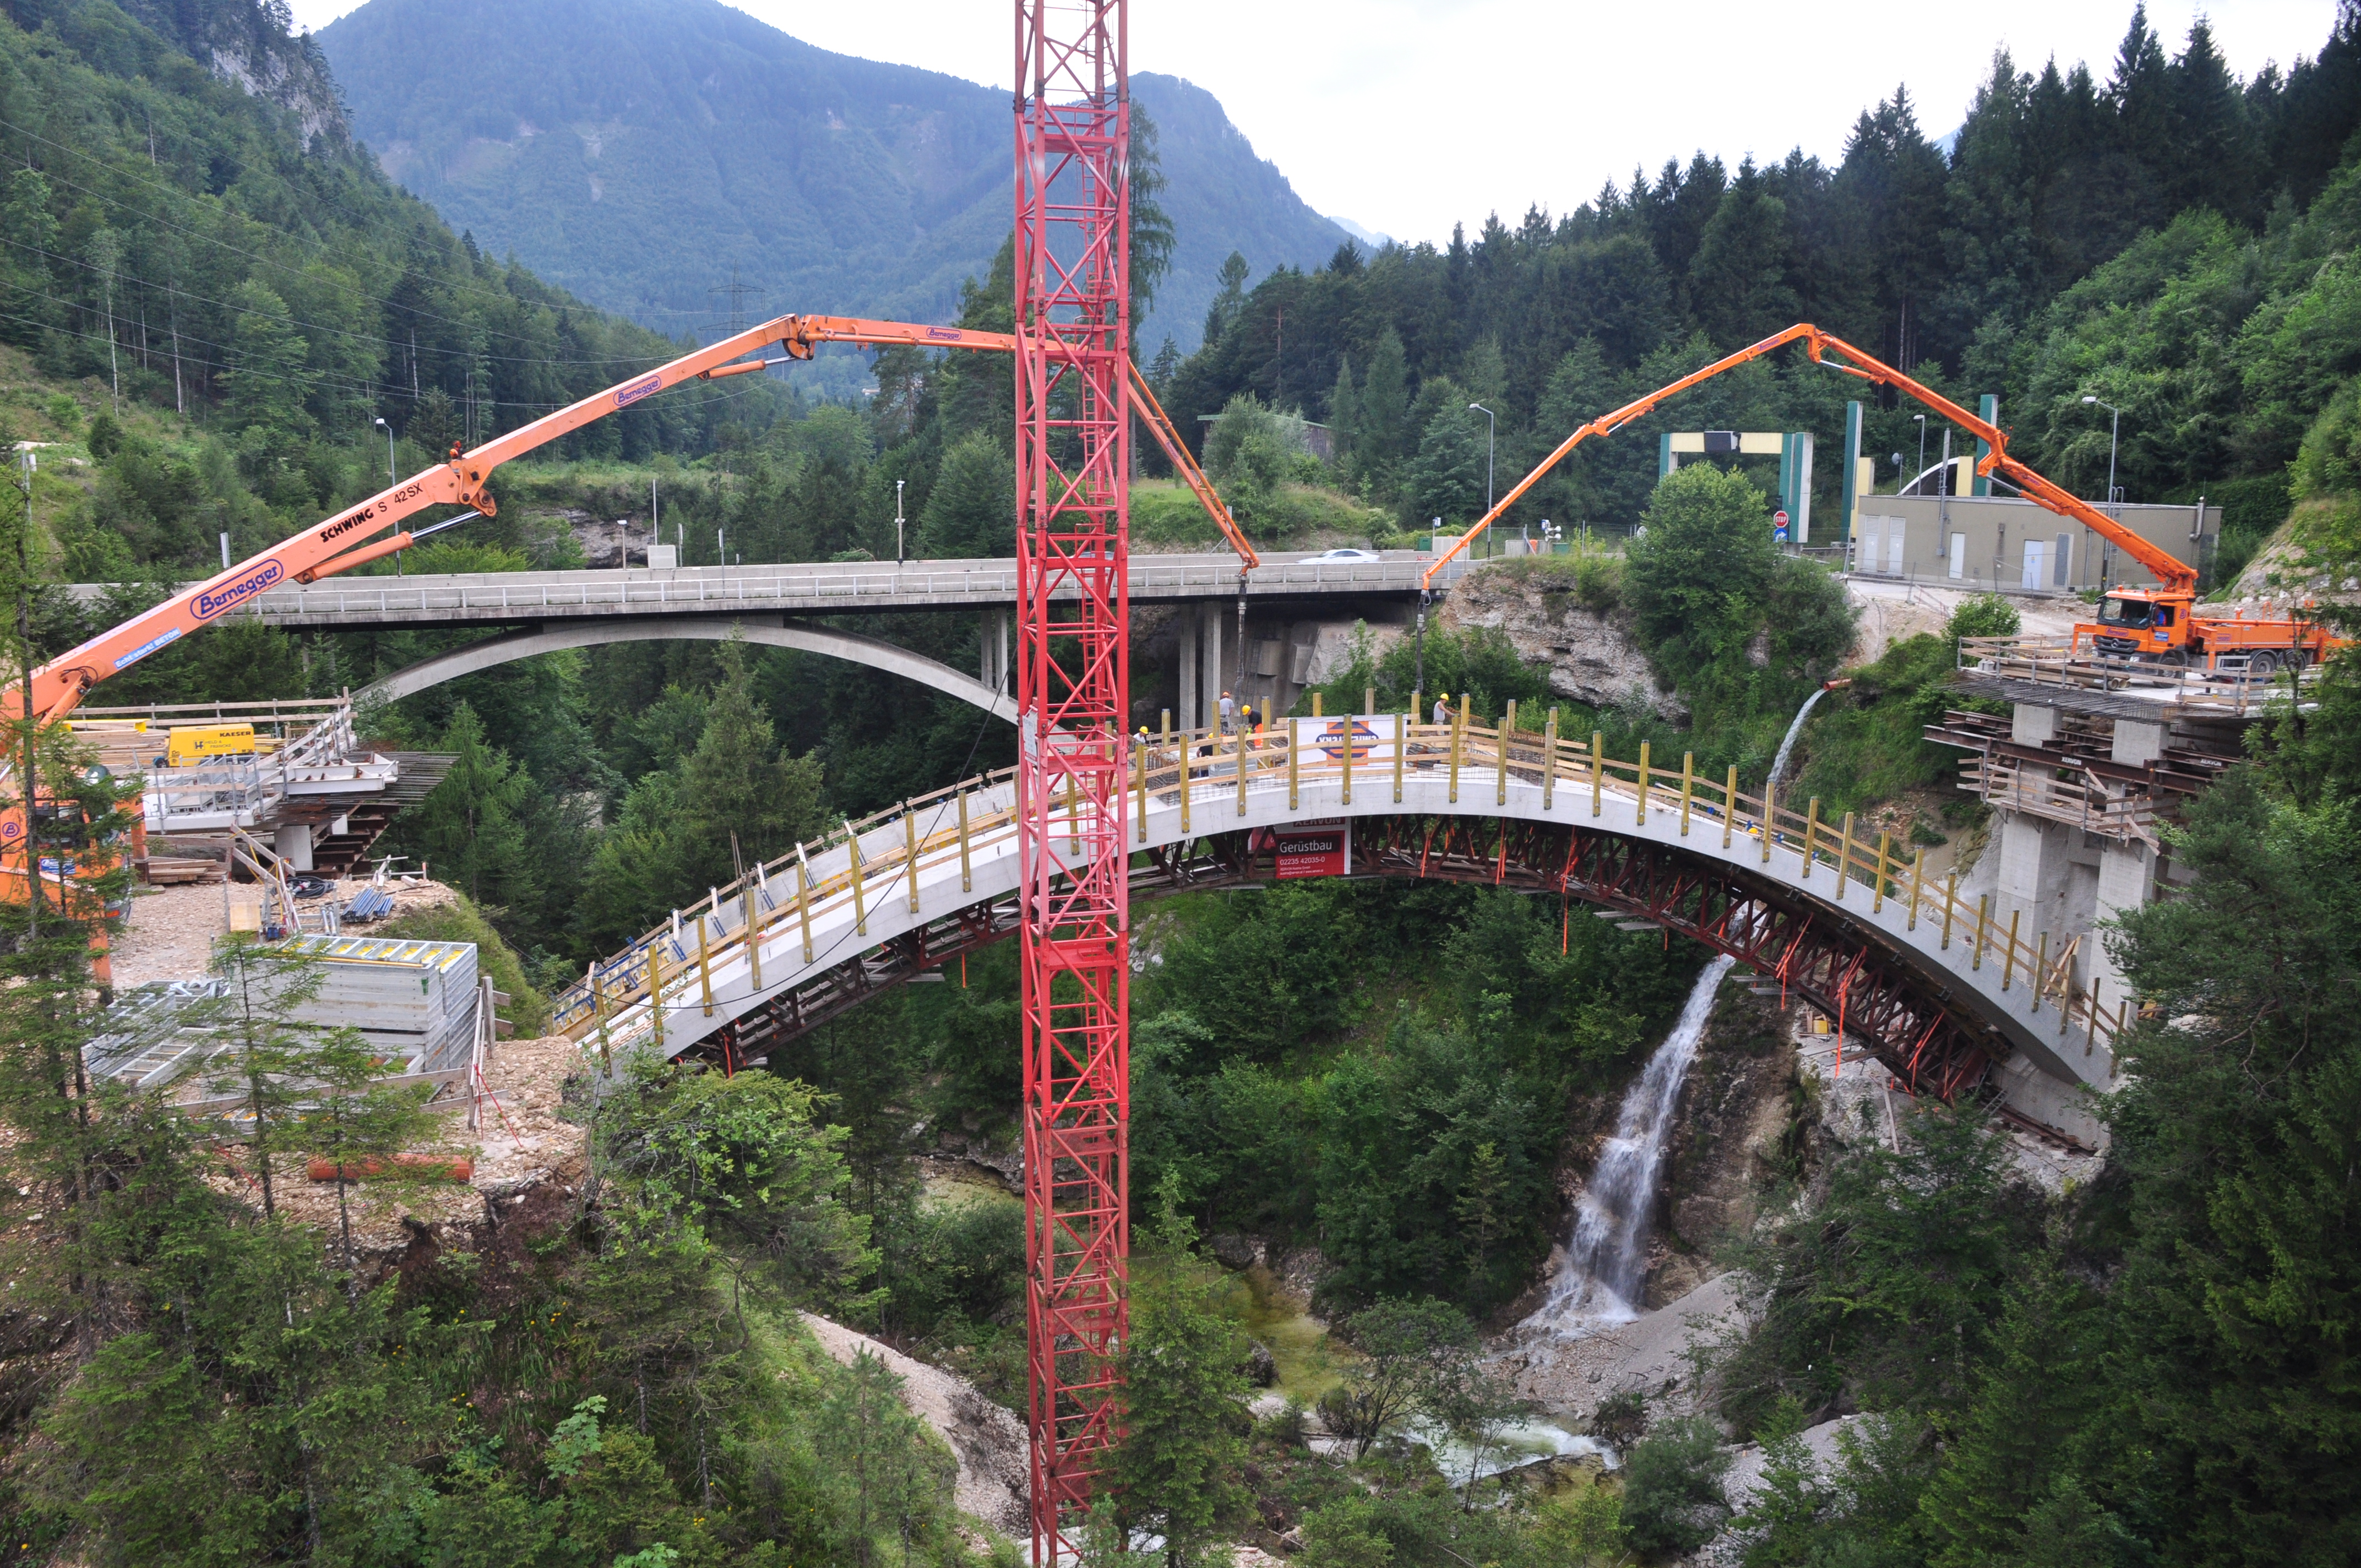 A9 Teichlbrücke - Road and bridge construction